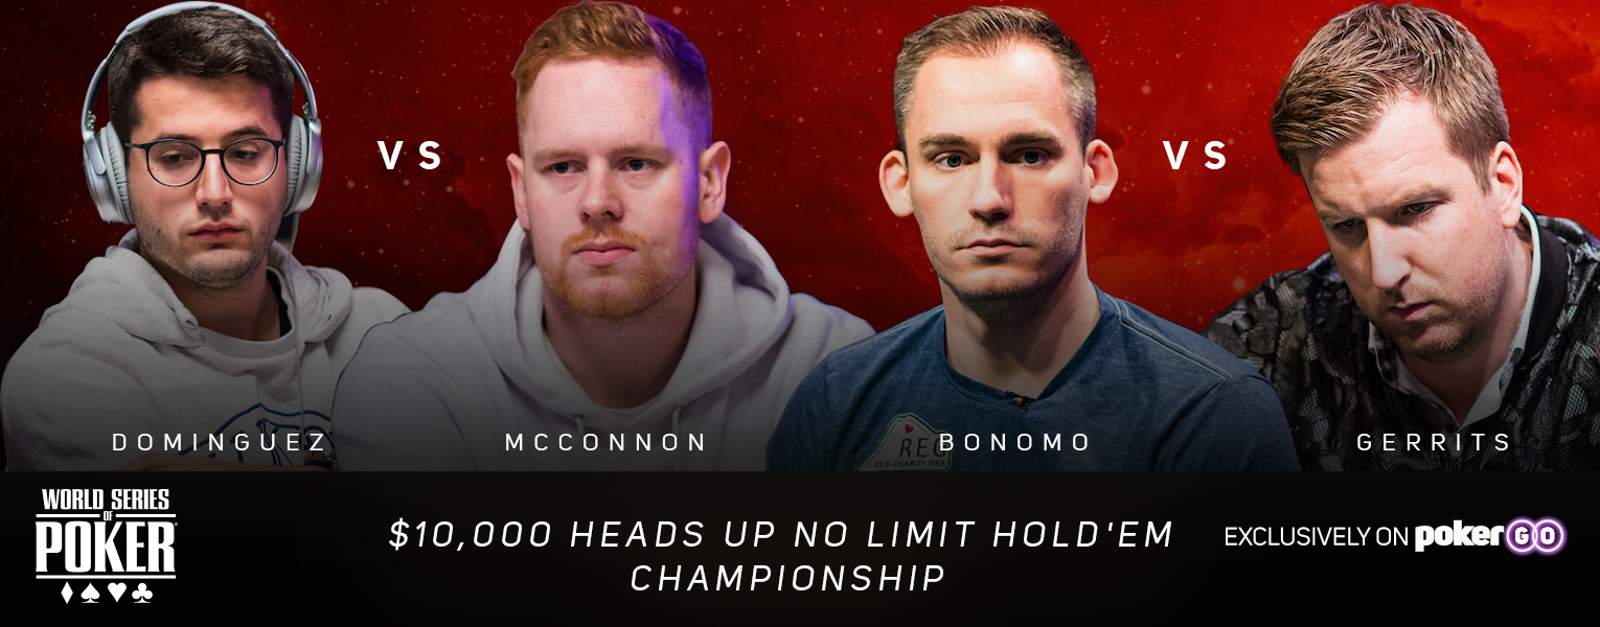 Bonomo Goes For Second Bracelet in $10K Heads Up Championship, Live on PokerGO